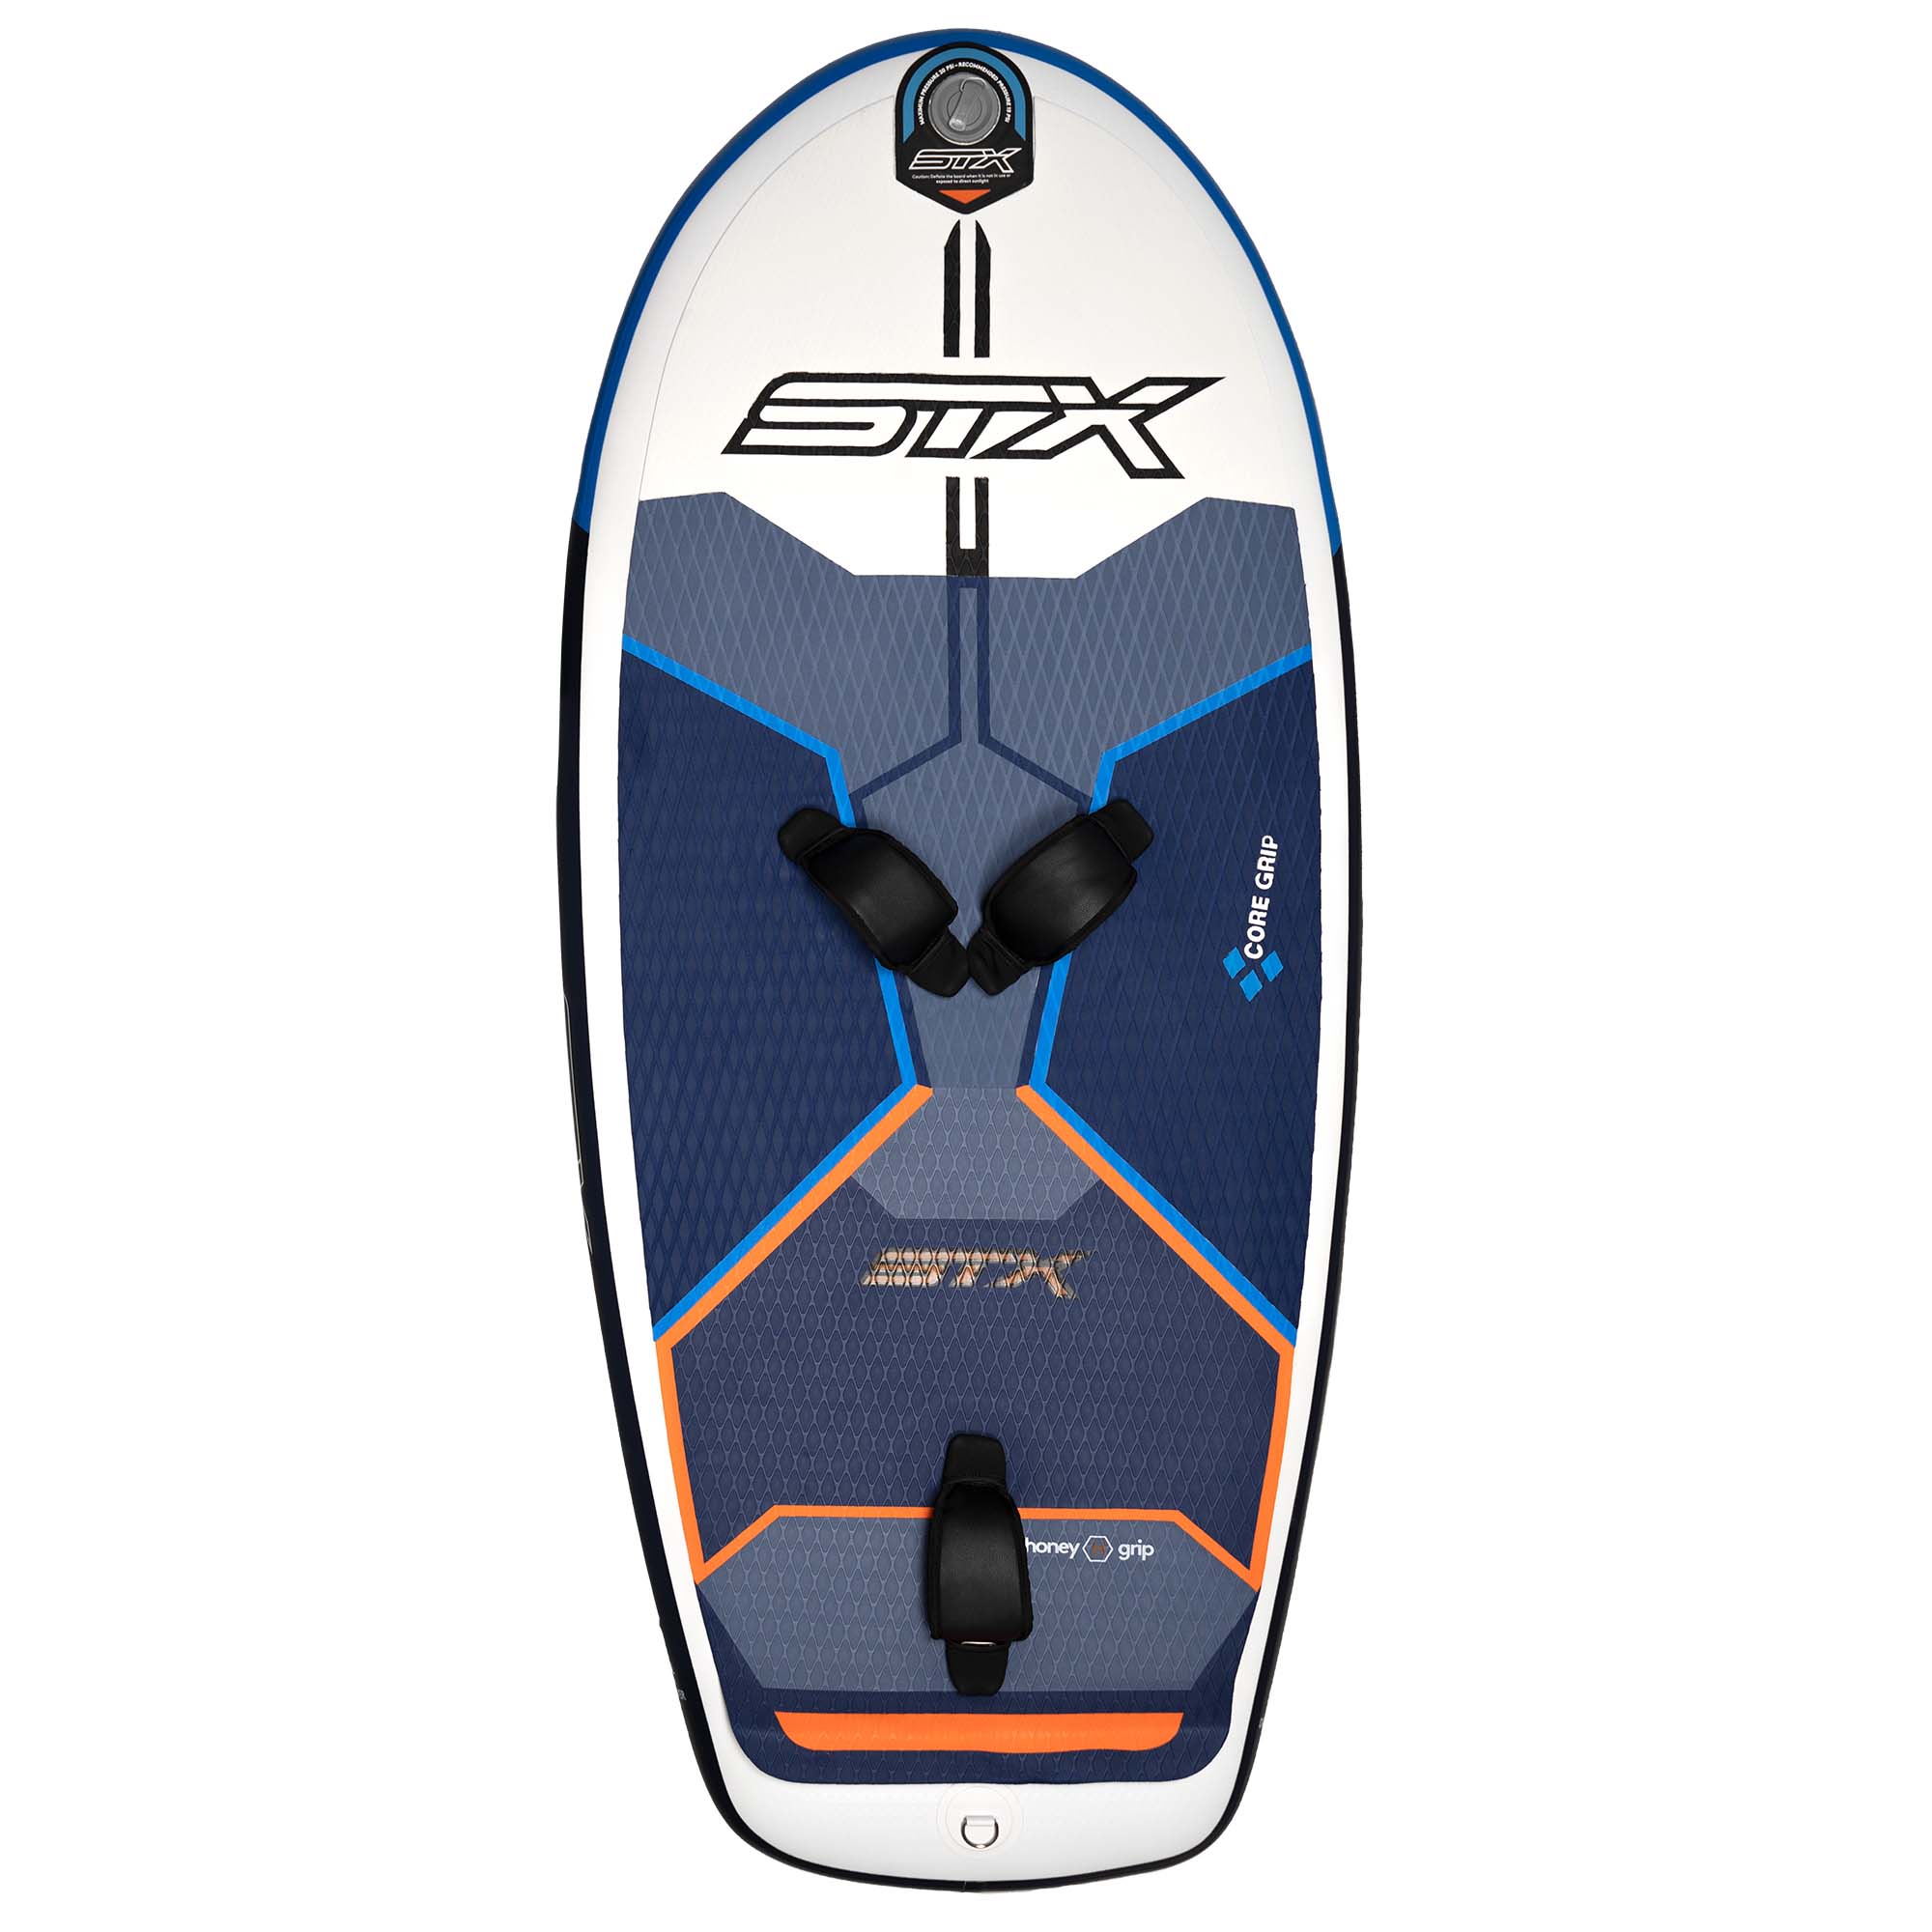 STX Ifoil board